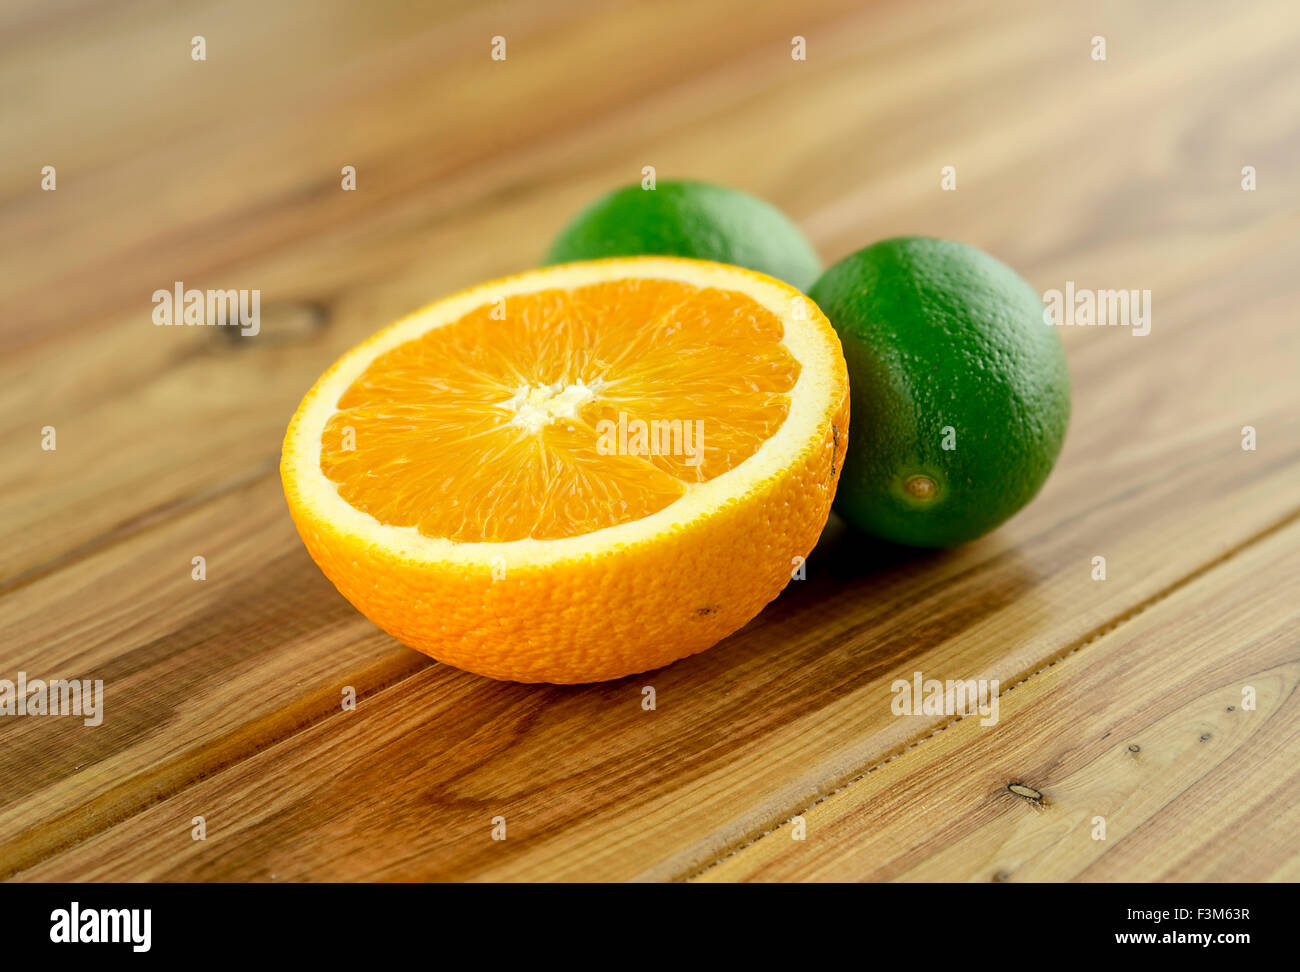 Sliced orange with deep green limes Stock Photo